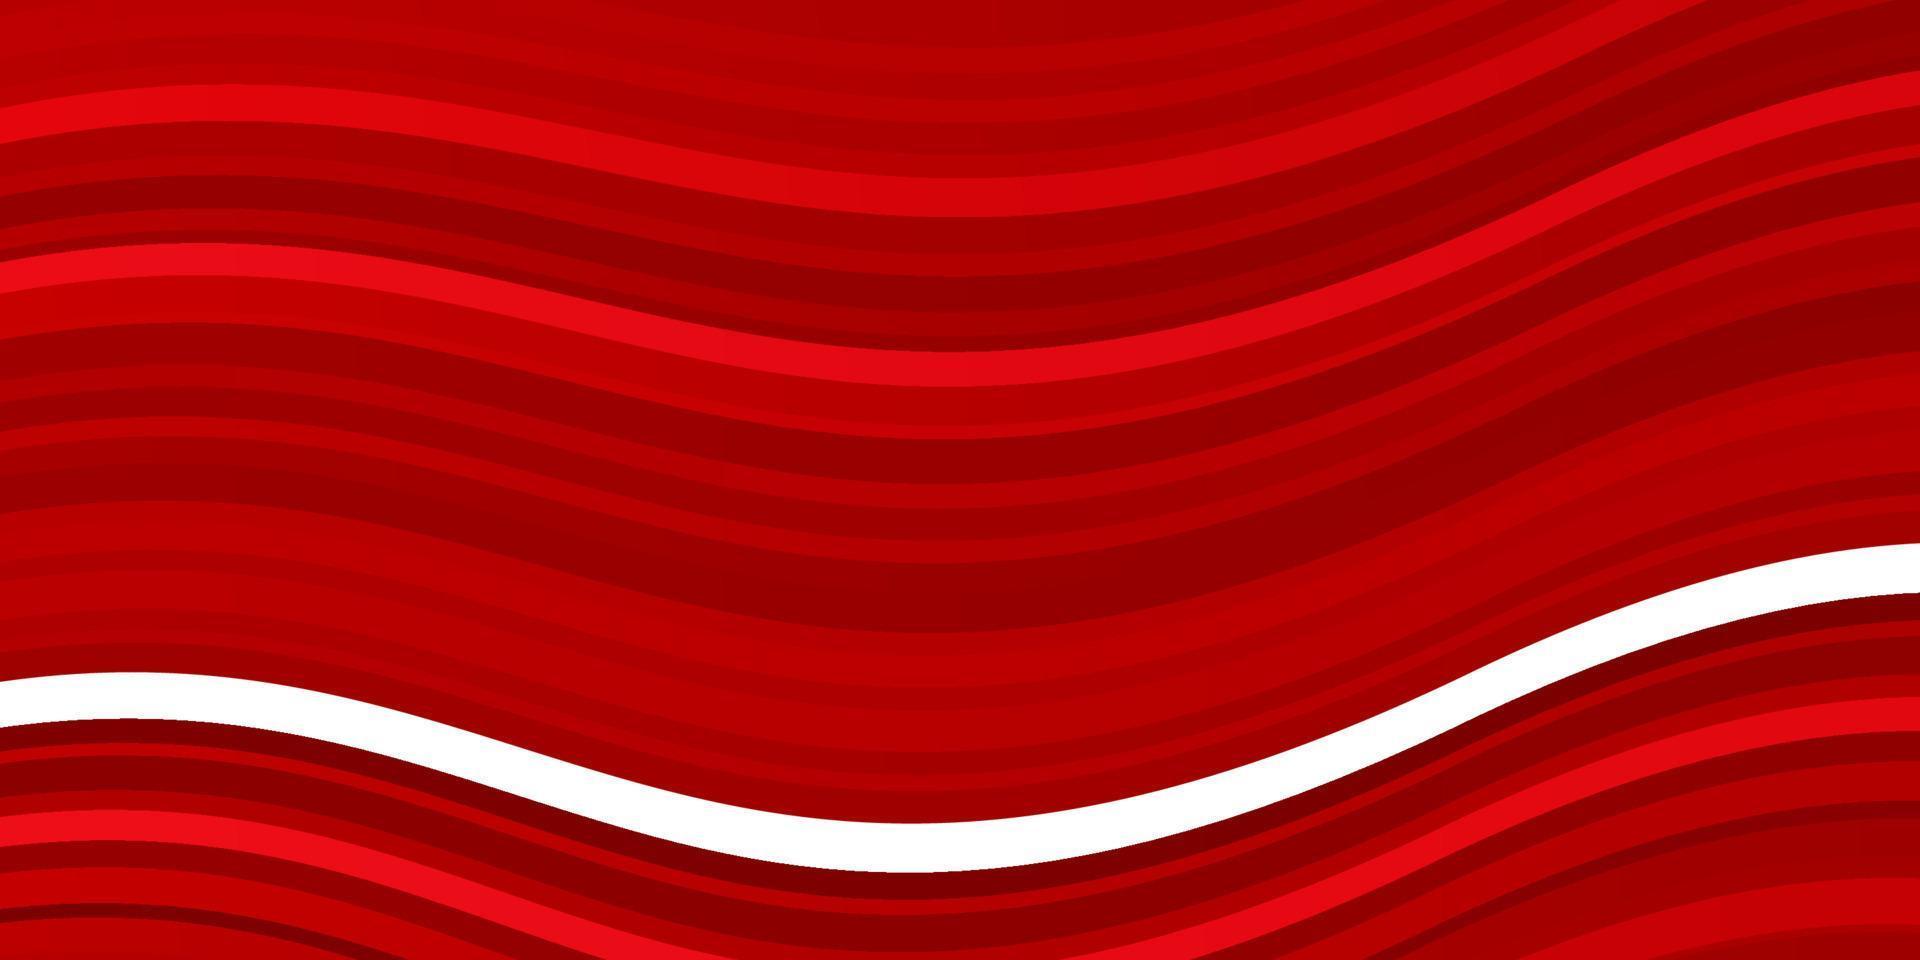 Fondo de vector rojo claro con líneas dobladas.